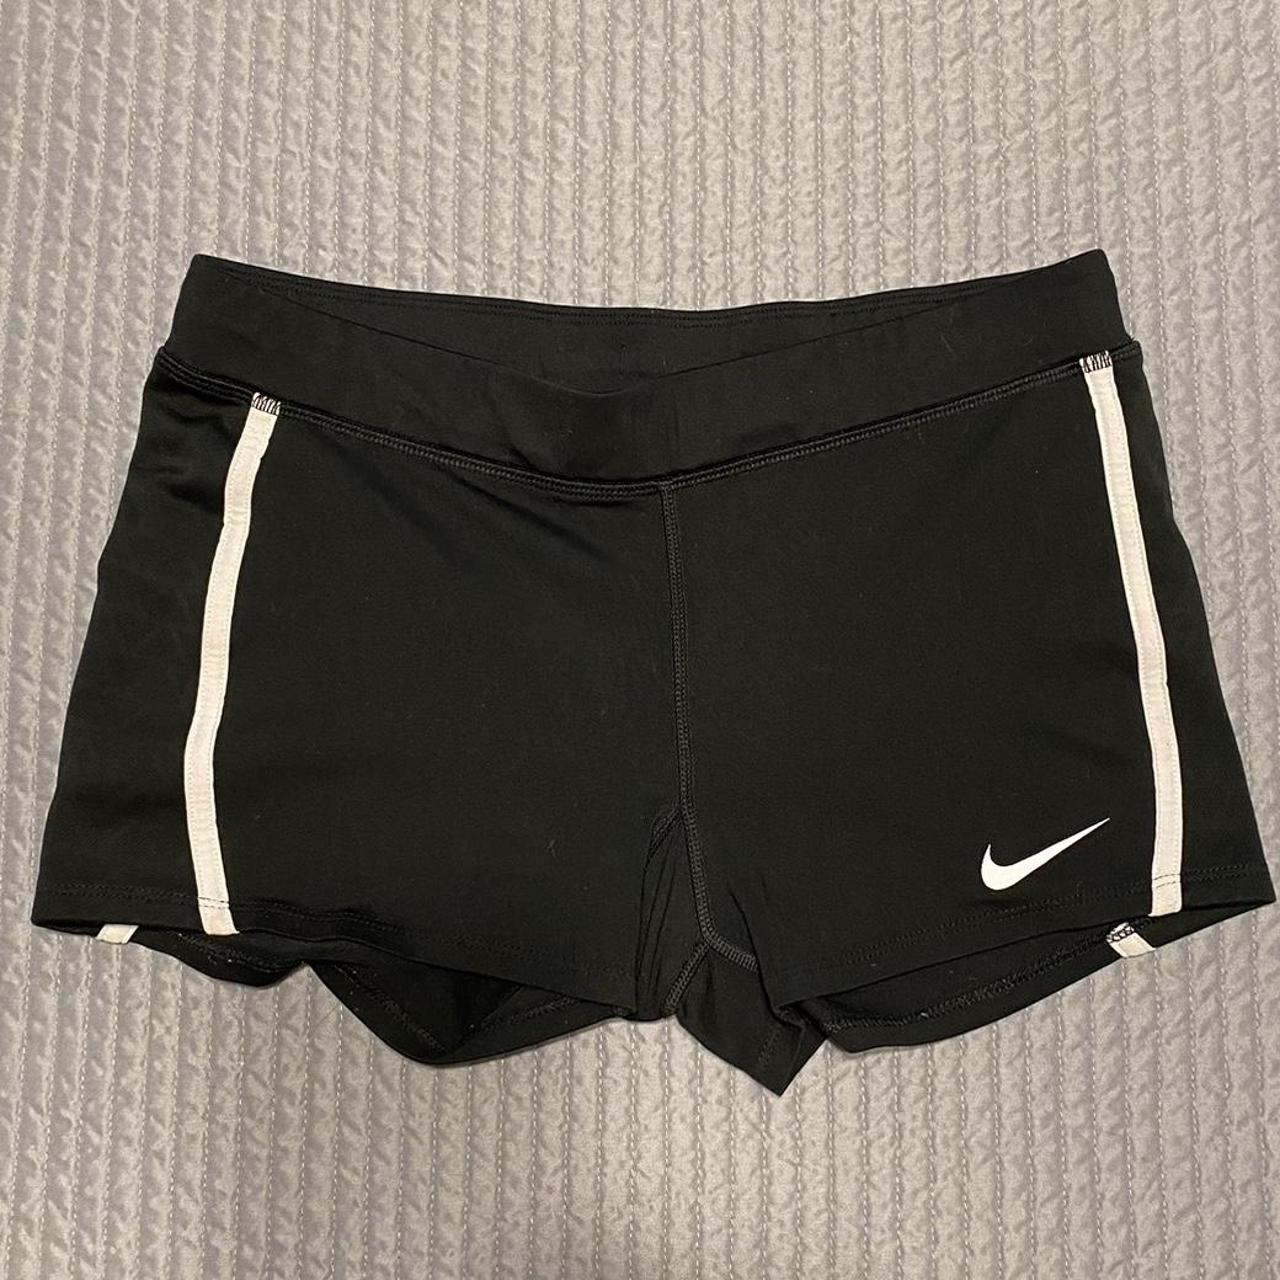 Women's Running Boy Shorts - Black